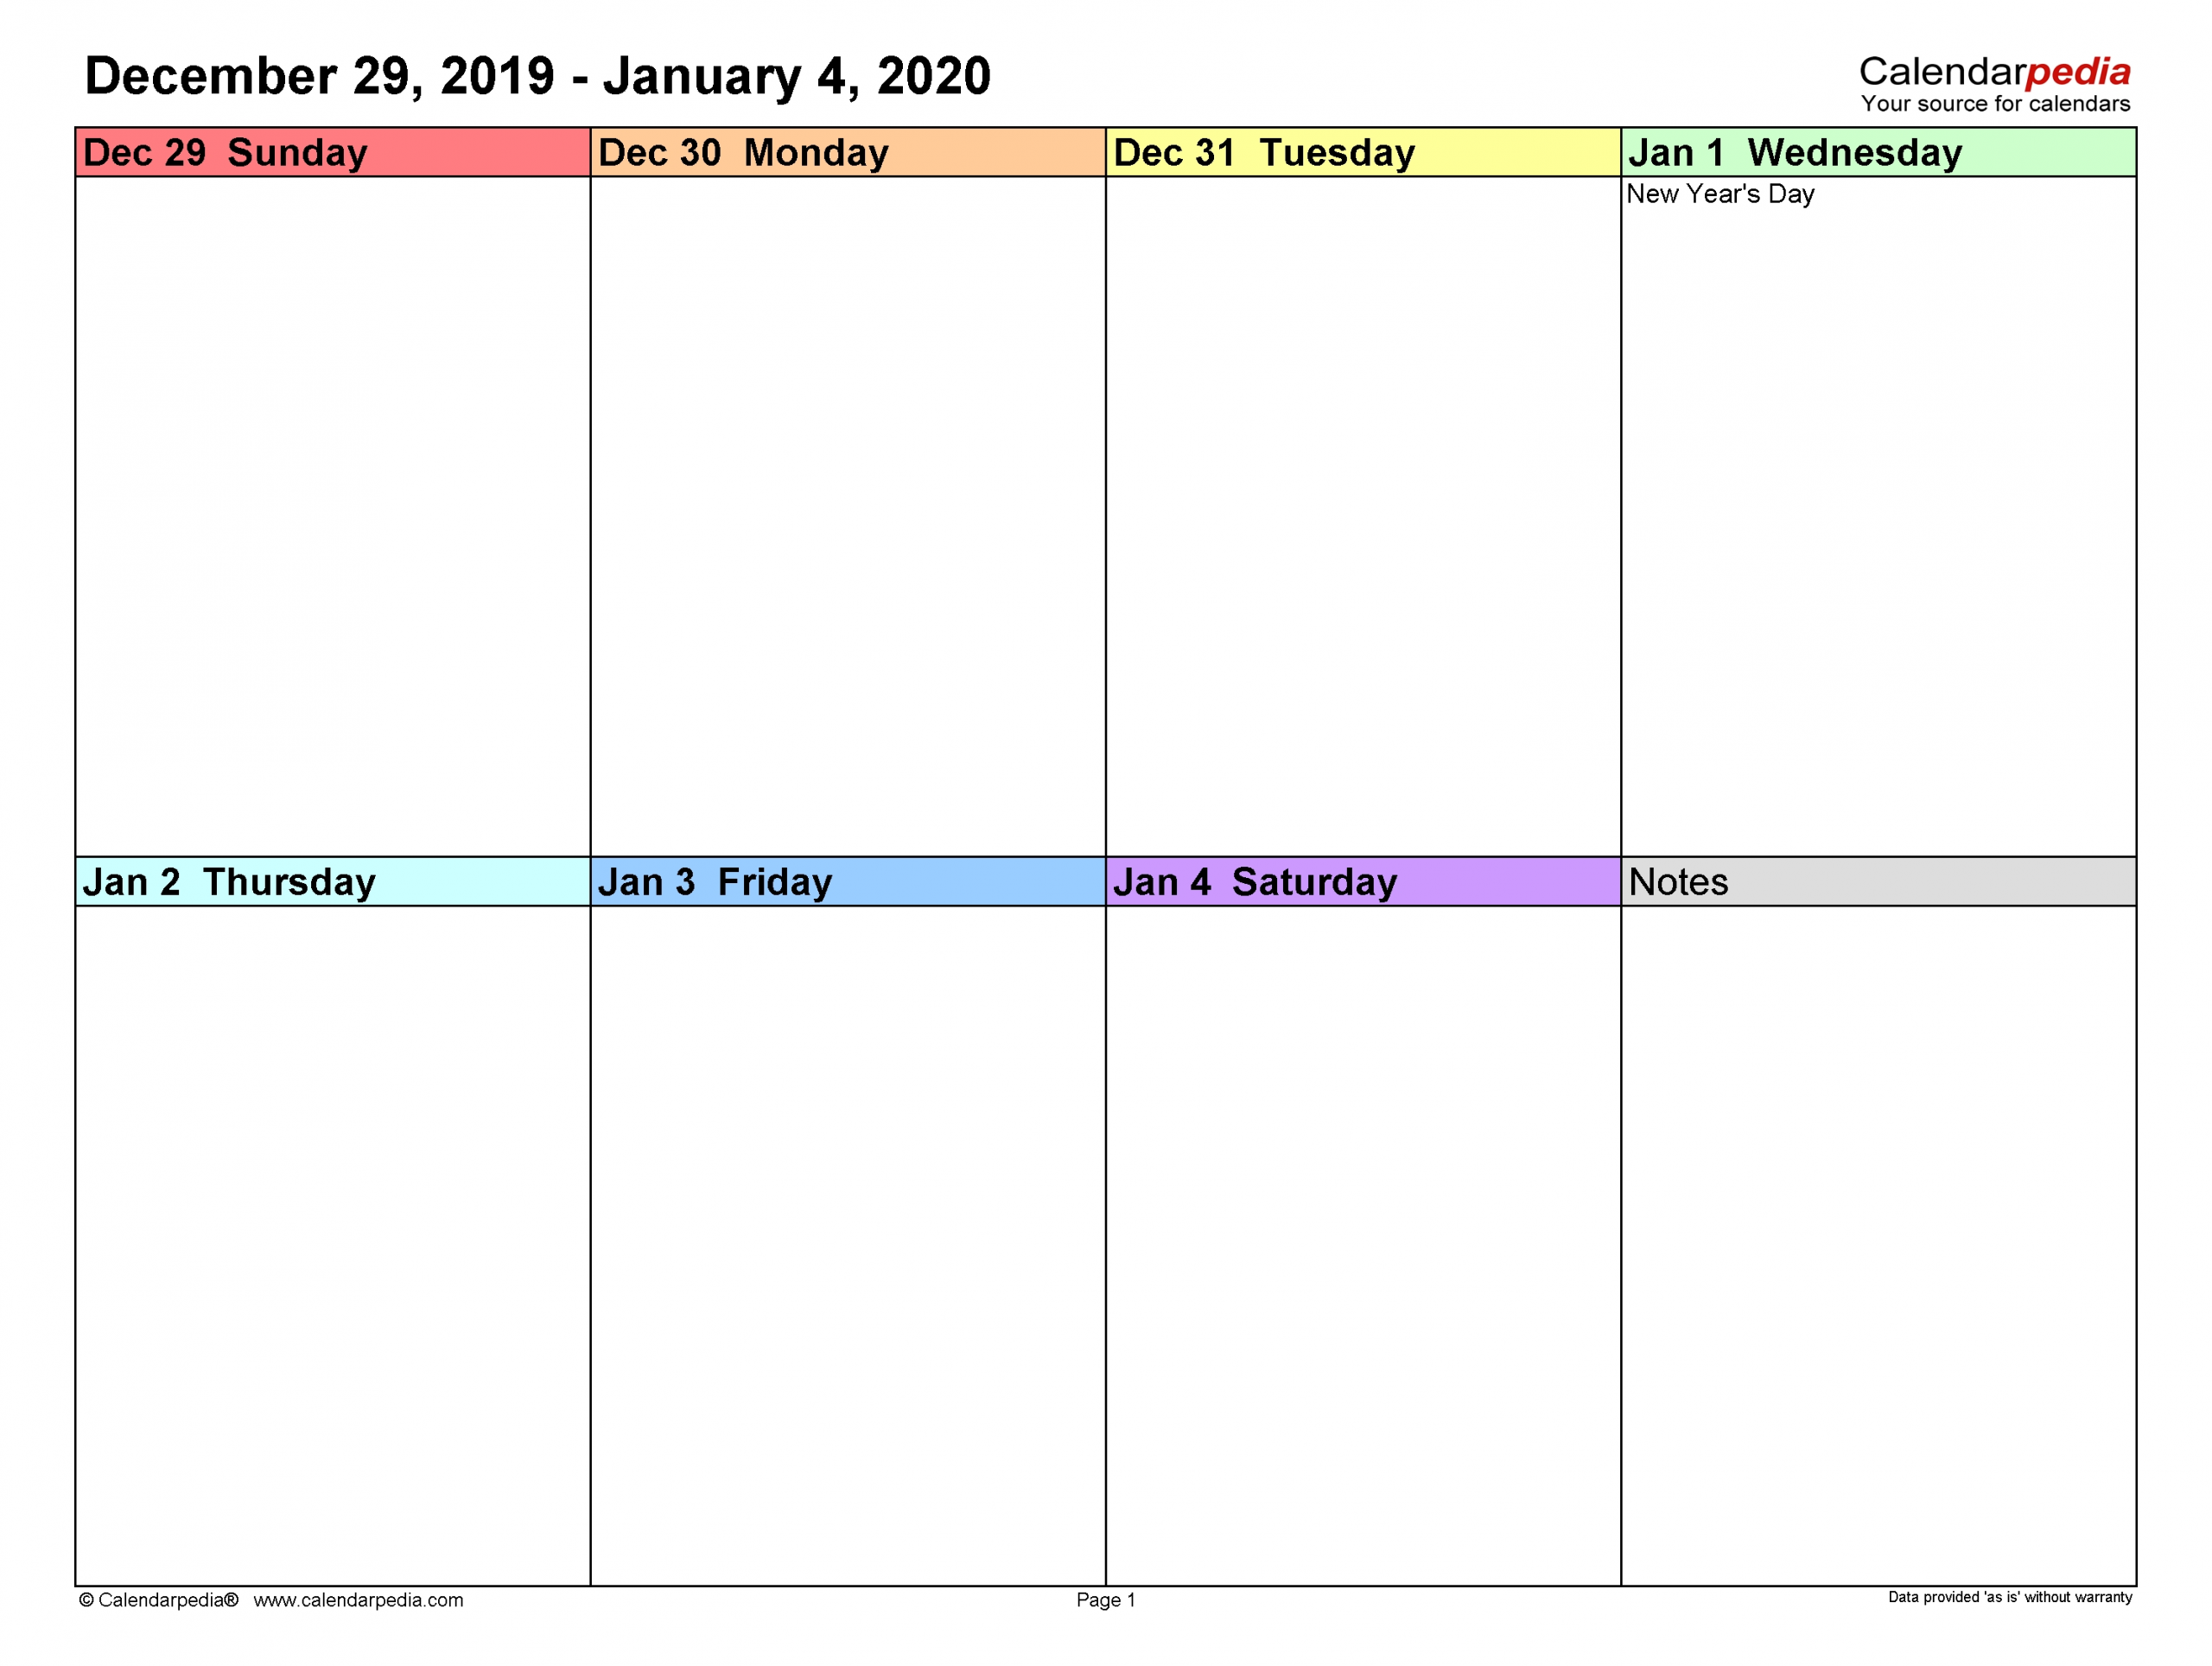 Weekly Calendars 2020 For Word - 12 Free Printable Templates Calendar Template Week View